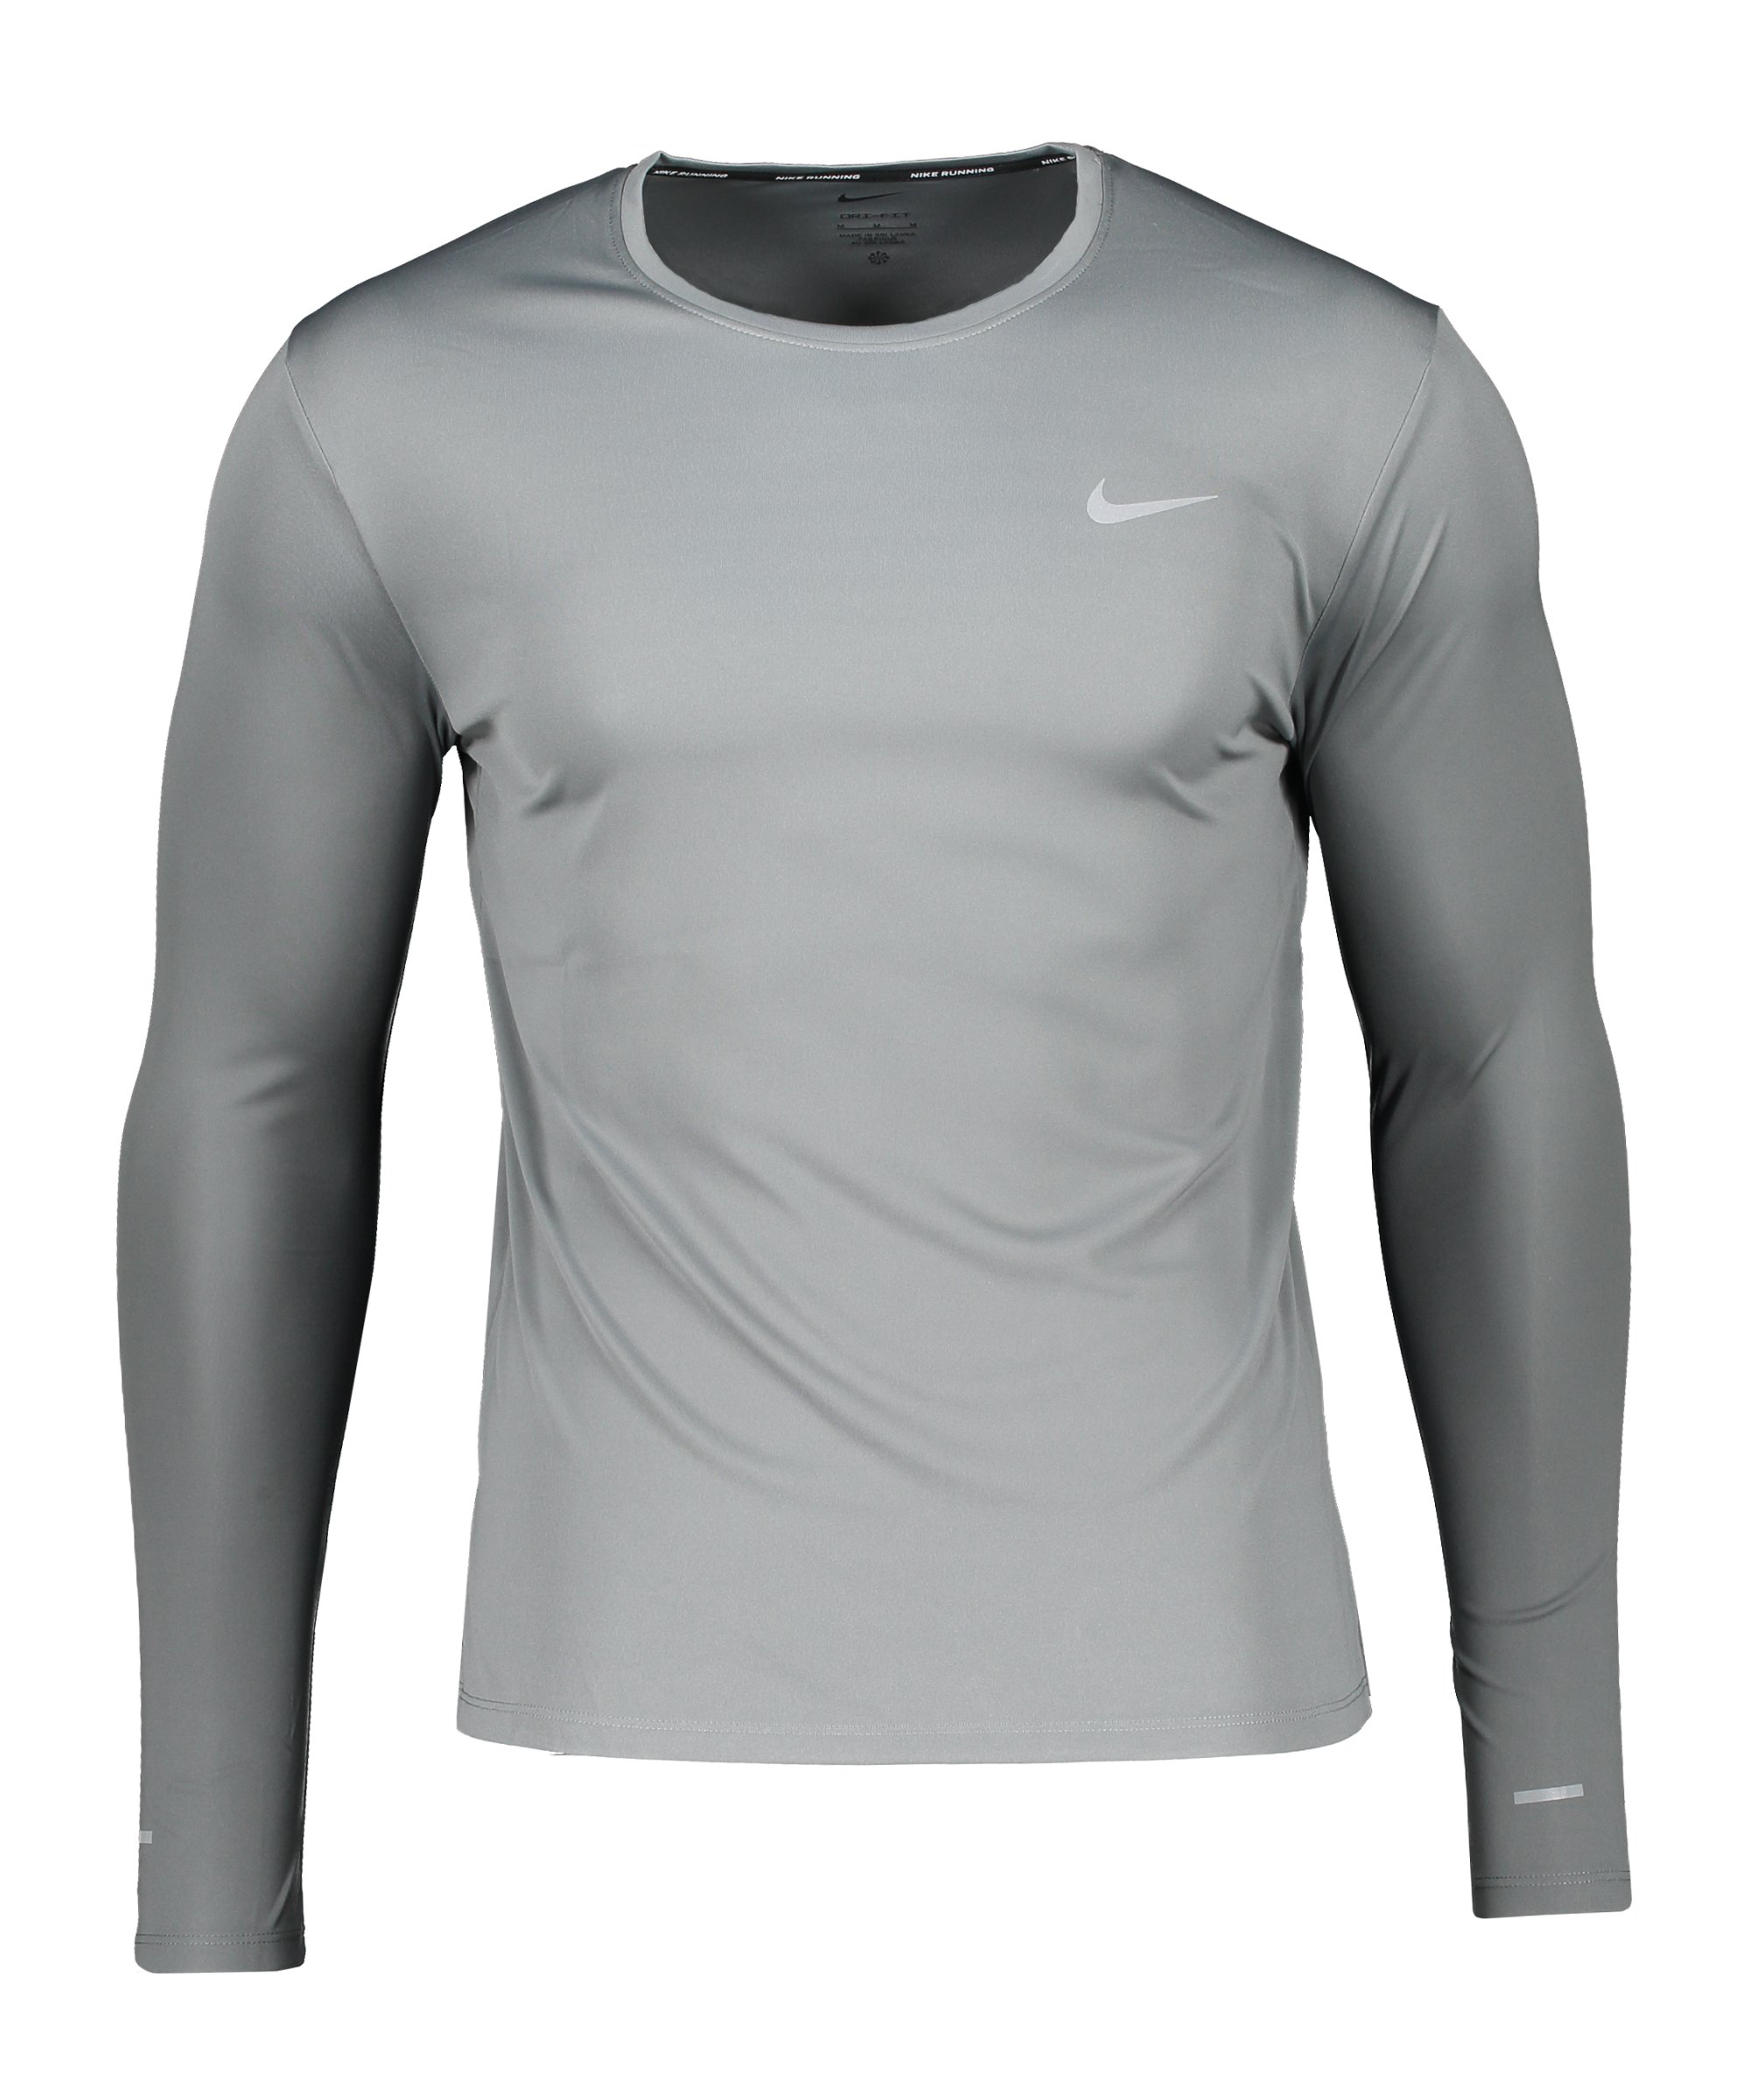 Nike Miler Top langarm Running Grau F084 - grau